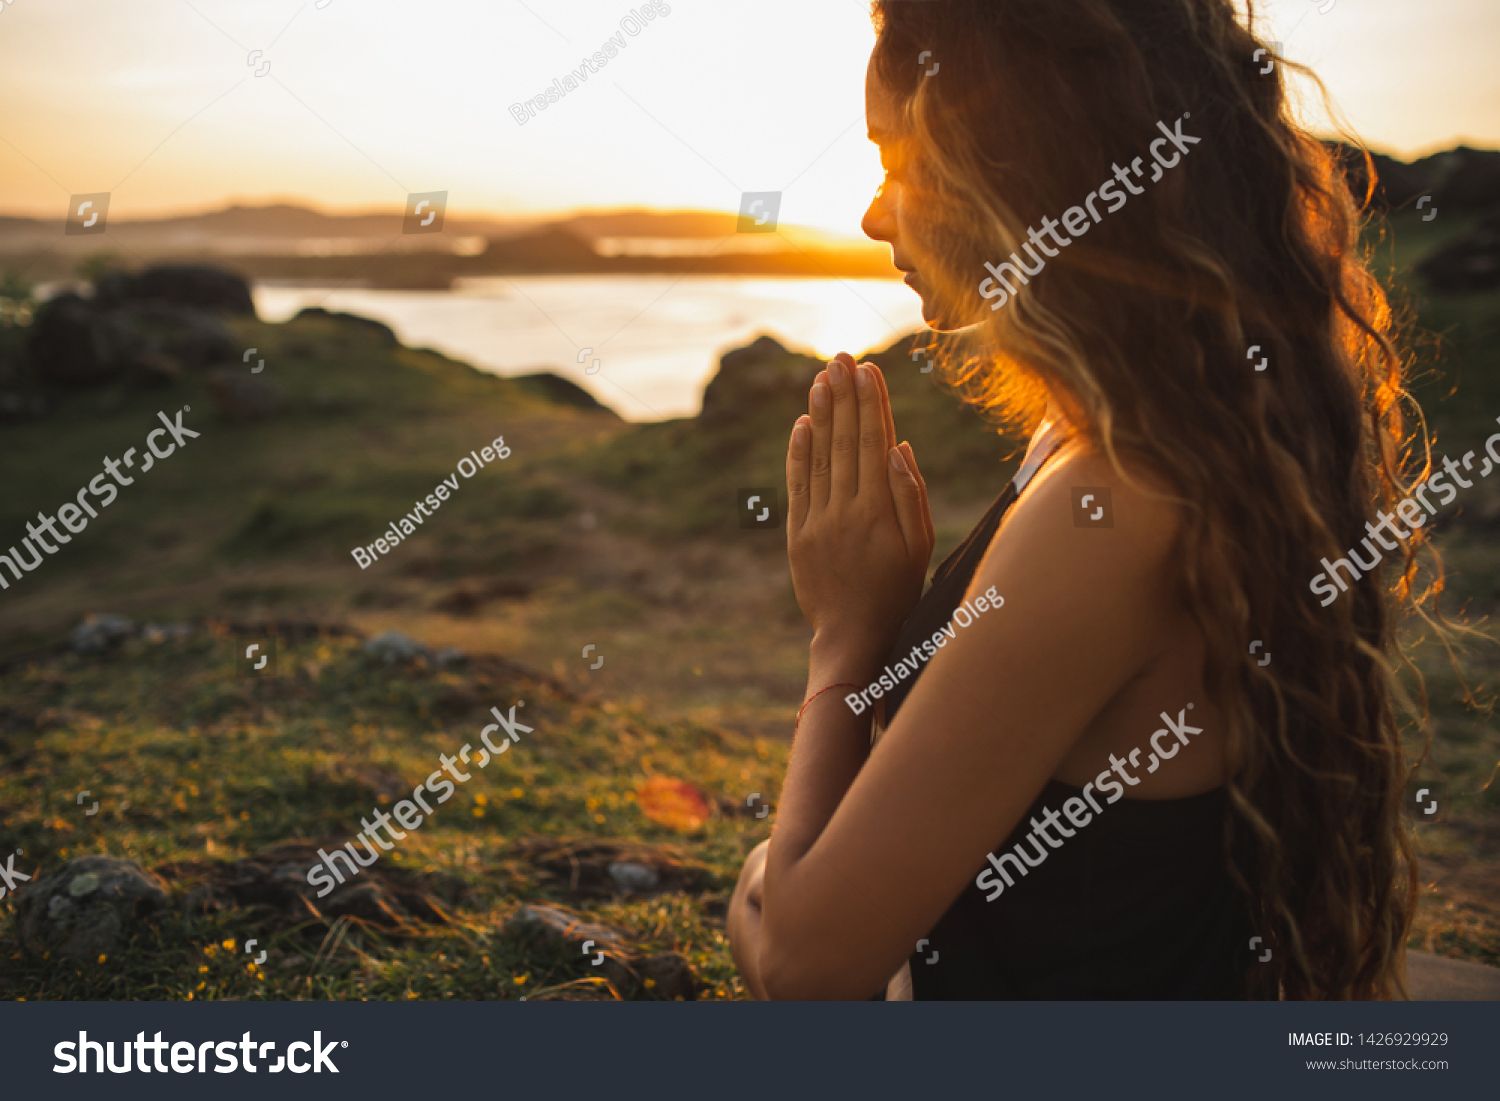 Woman praying alone at sunrise. Nature background. Spiritual and emotional concept. Sensitivity to nature #1426929929